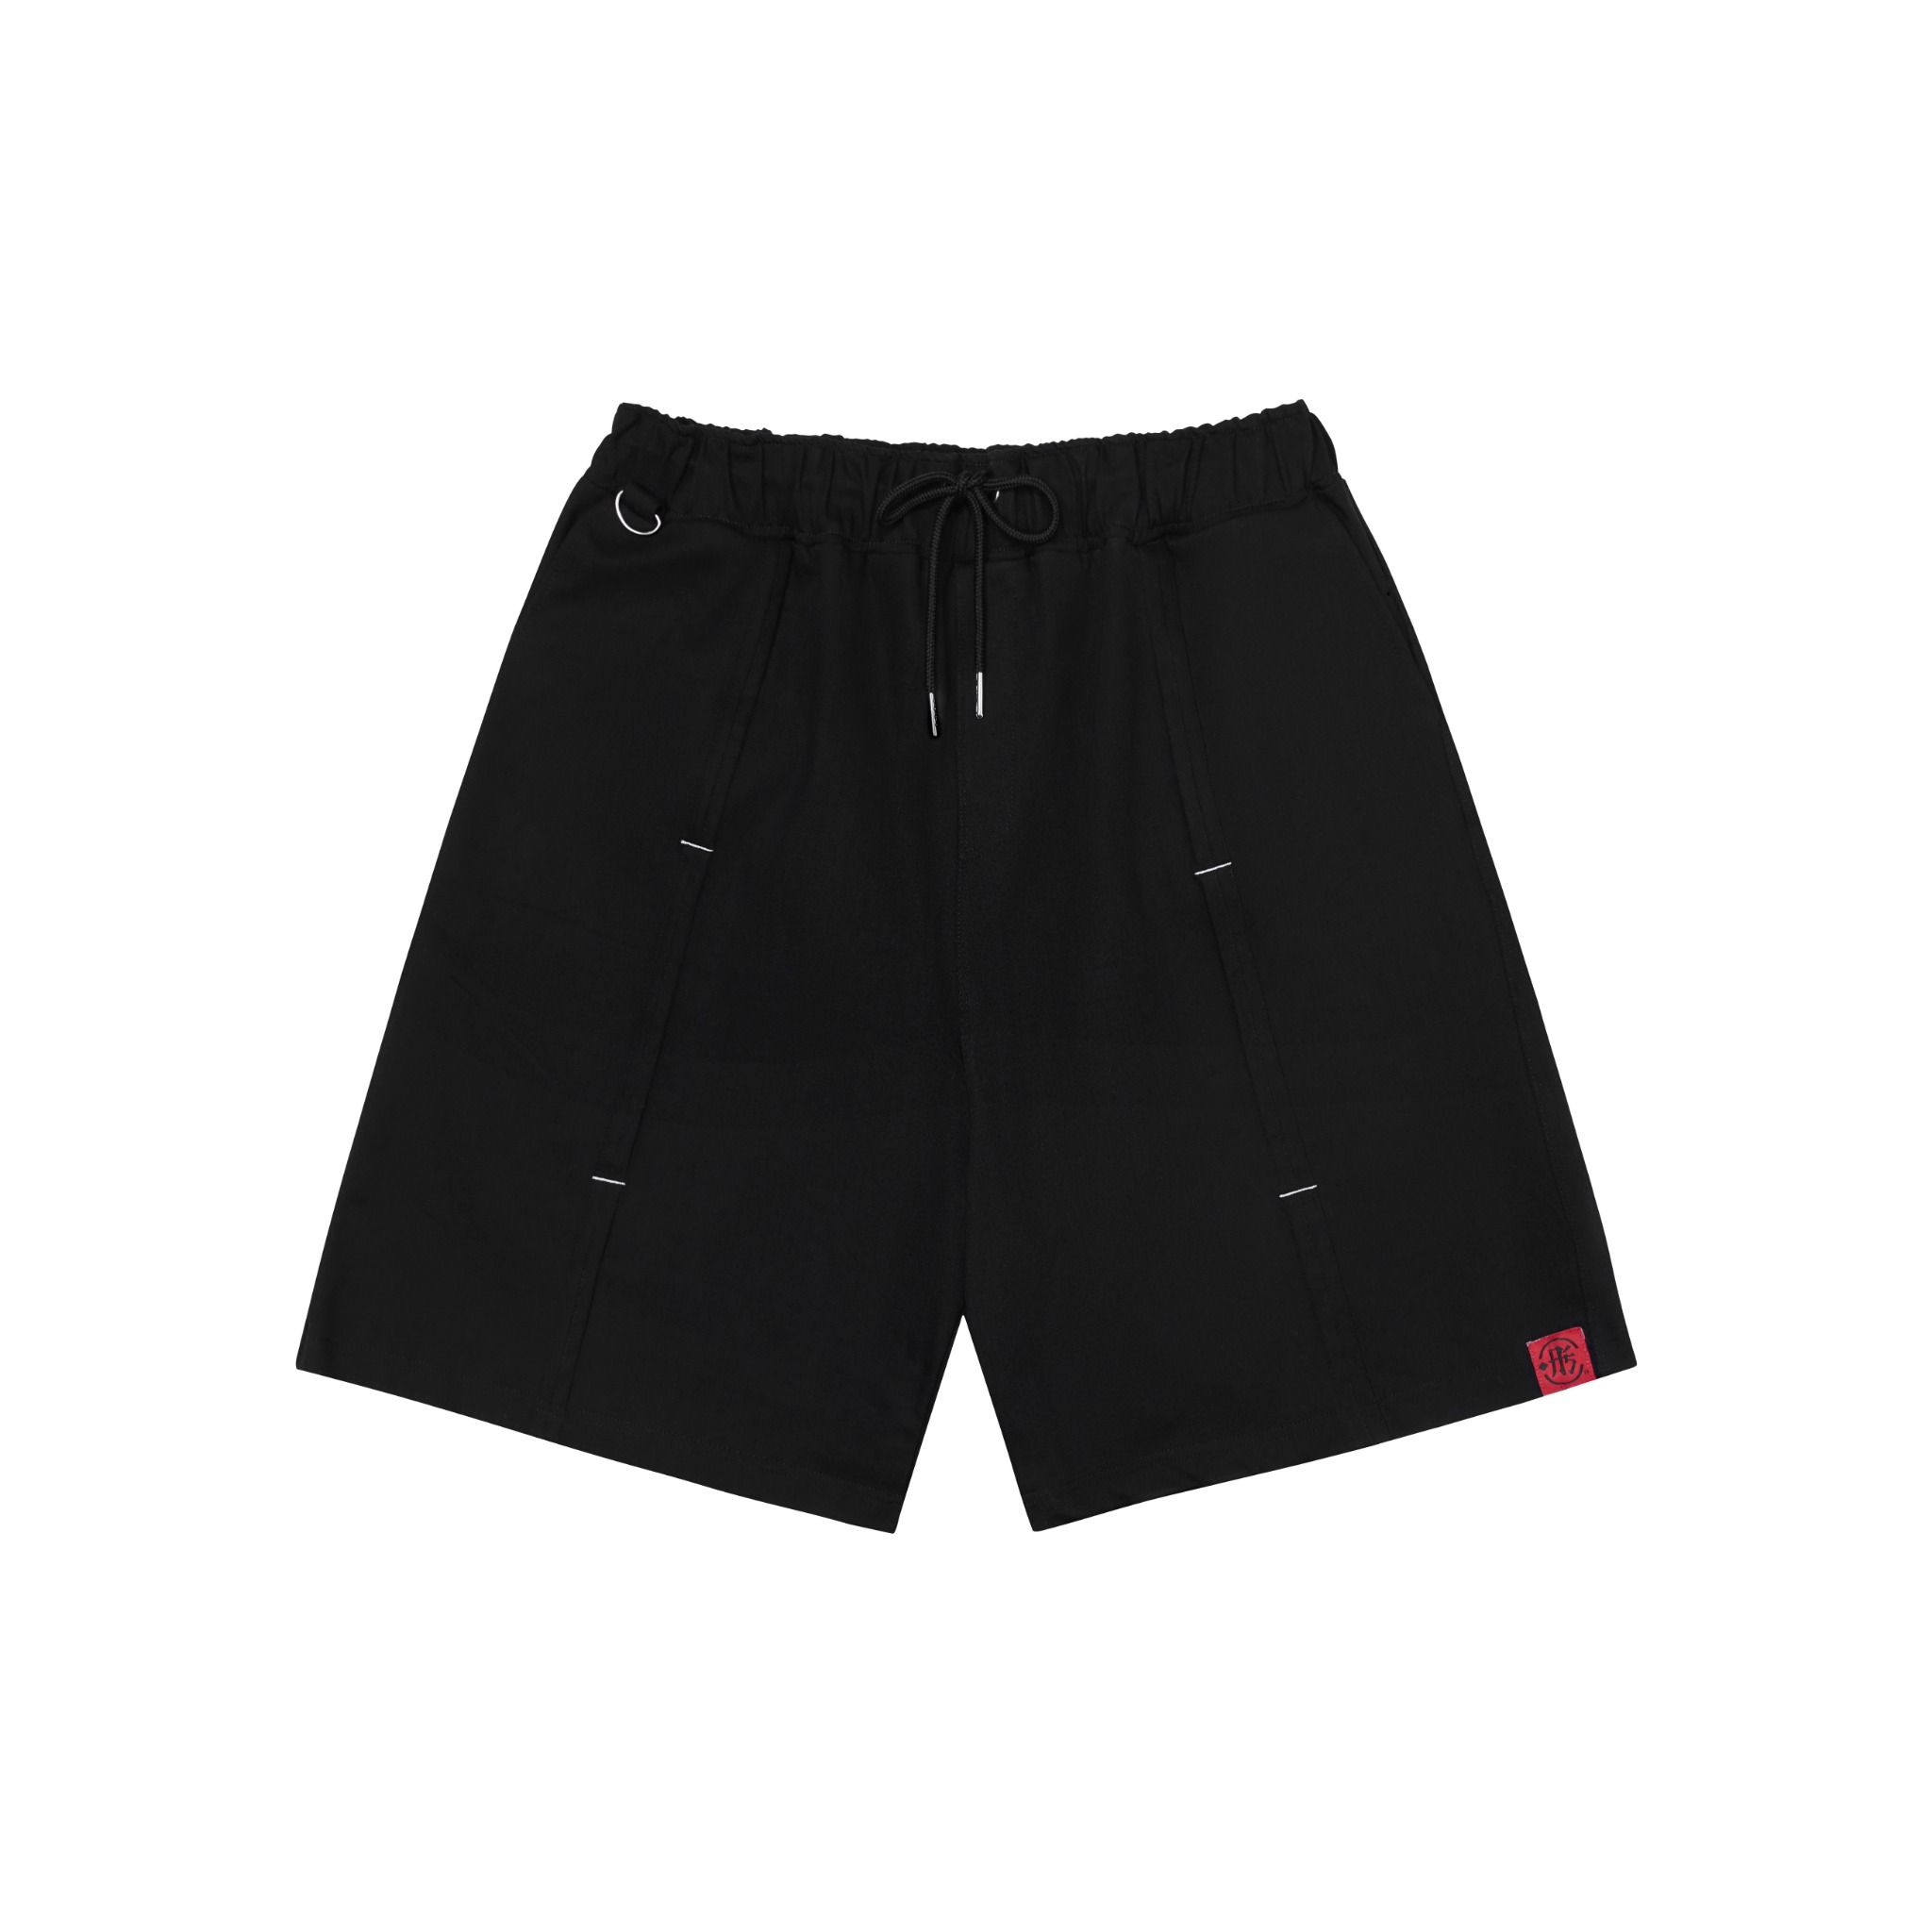  Apride Line Shorts - Black 